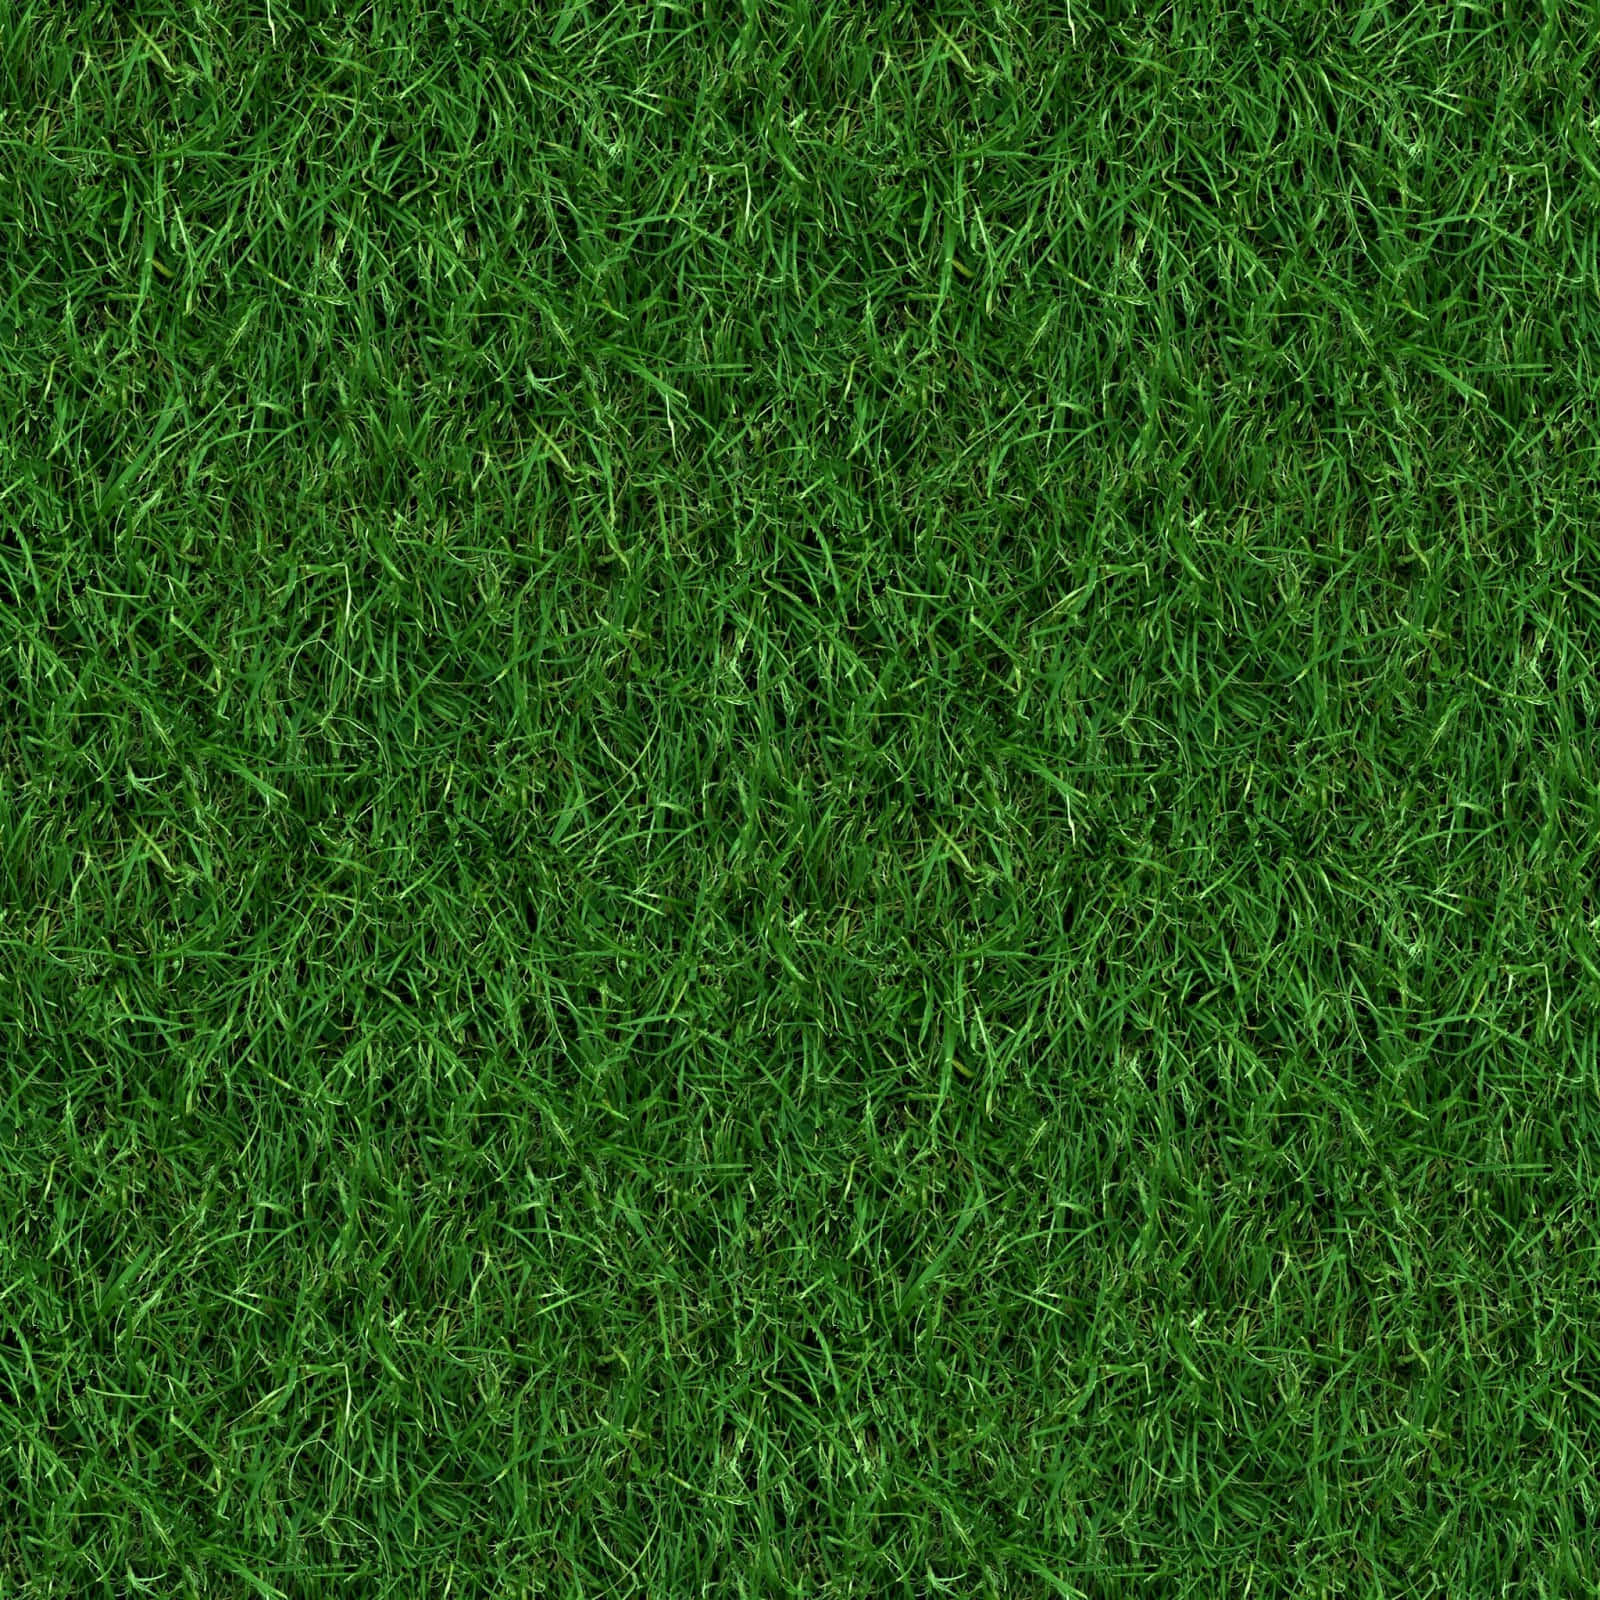 Engrön Gräsbakgrund Med En Grästextur